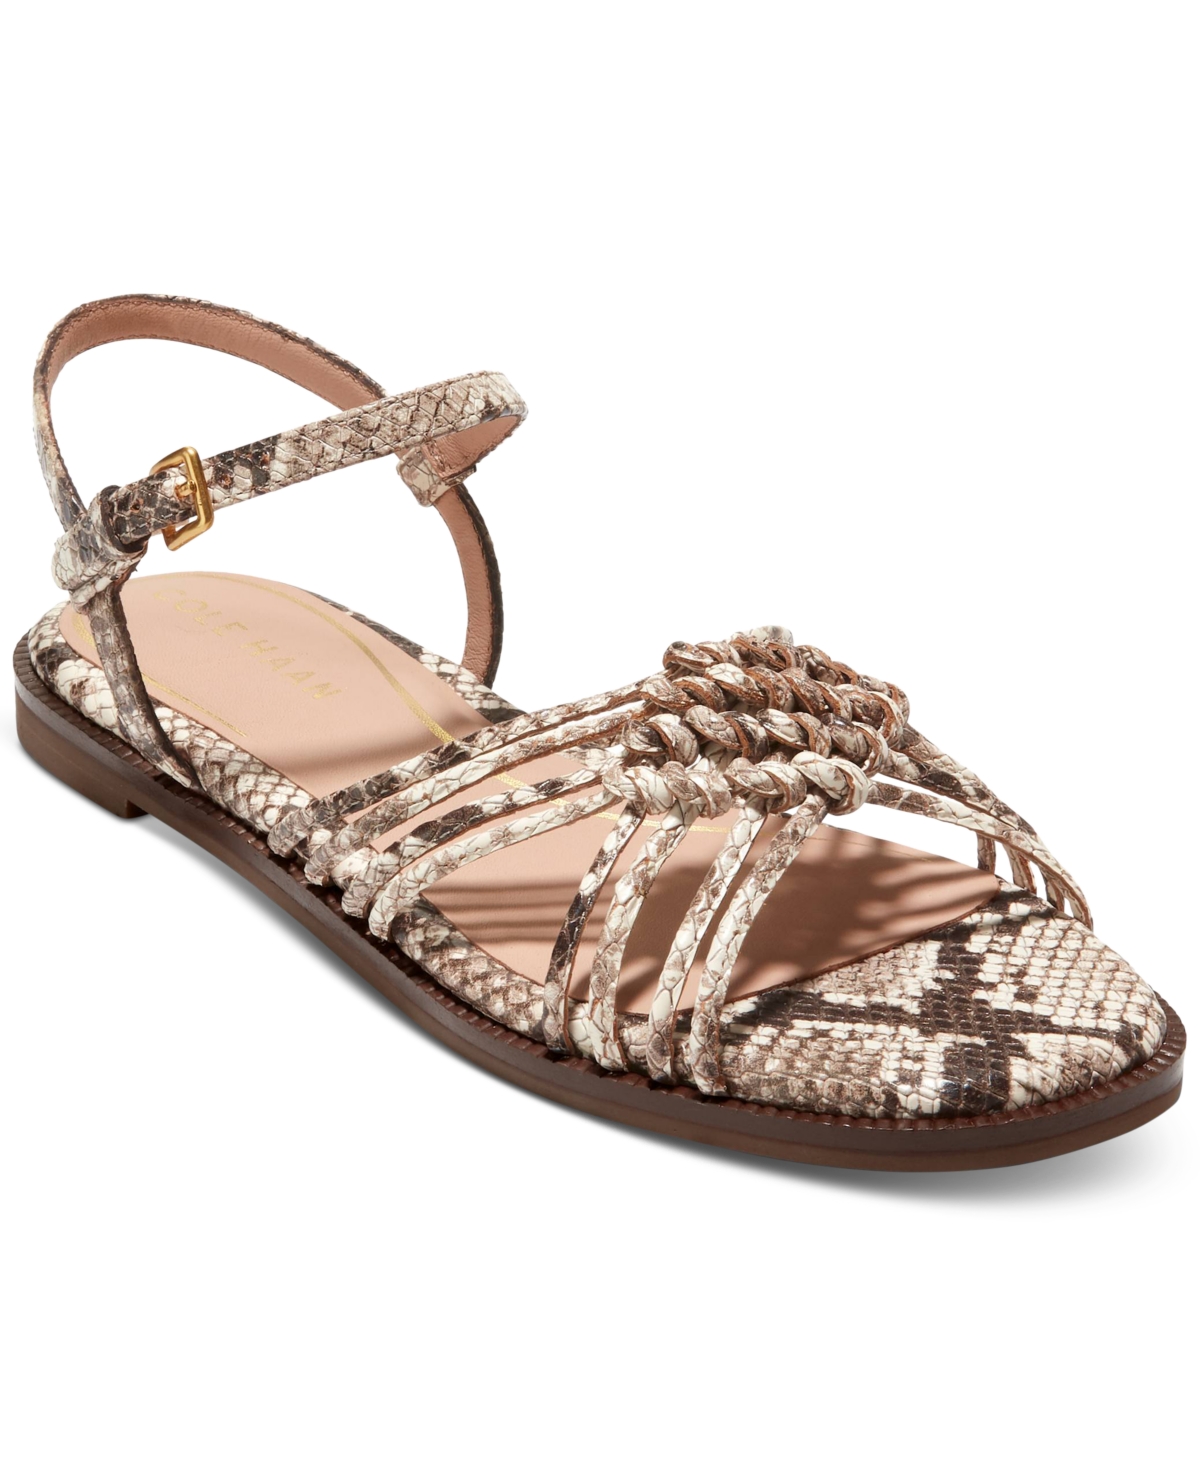 Women's Jitney Ankle-Strap Knotted Flat Sandals - Sandollar Soho Snake Print Leather